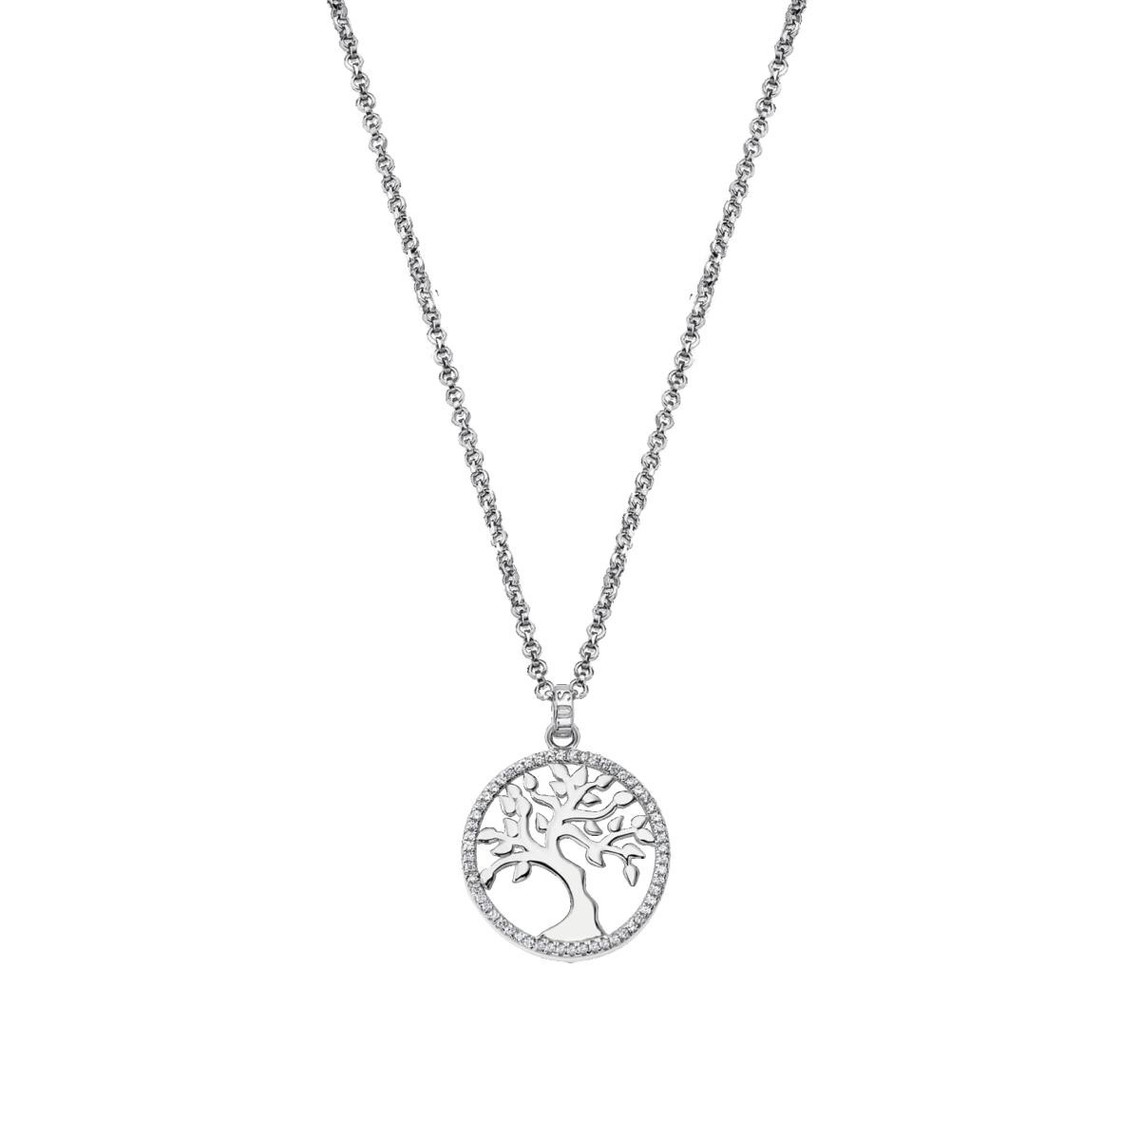 collier et pendentif lotus silver tree of life lp1778-1-1 - collier et pendentif tree of life argentlotus silver